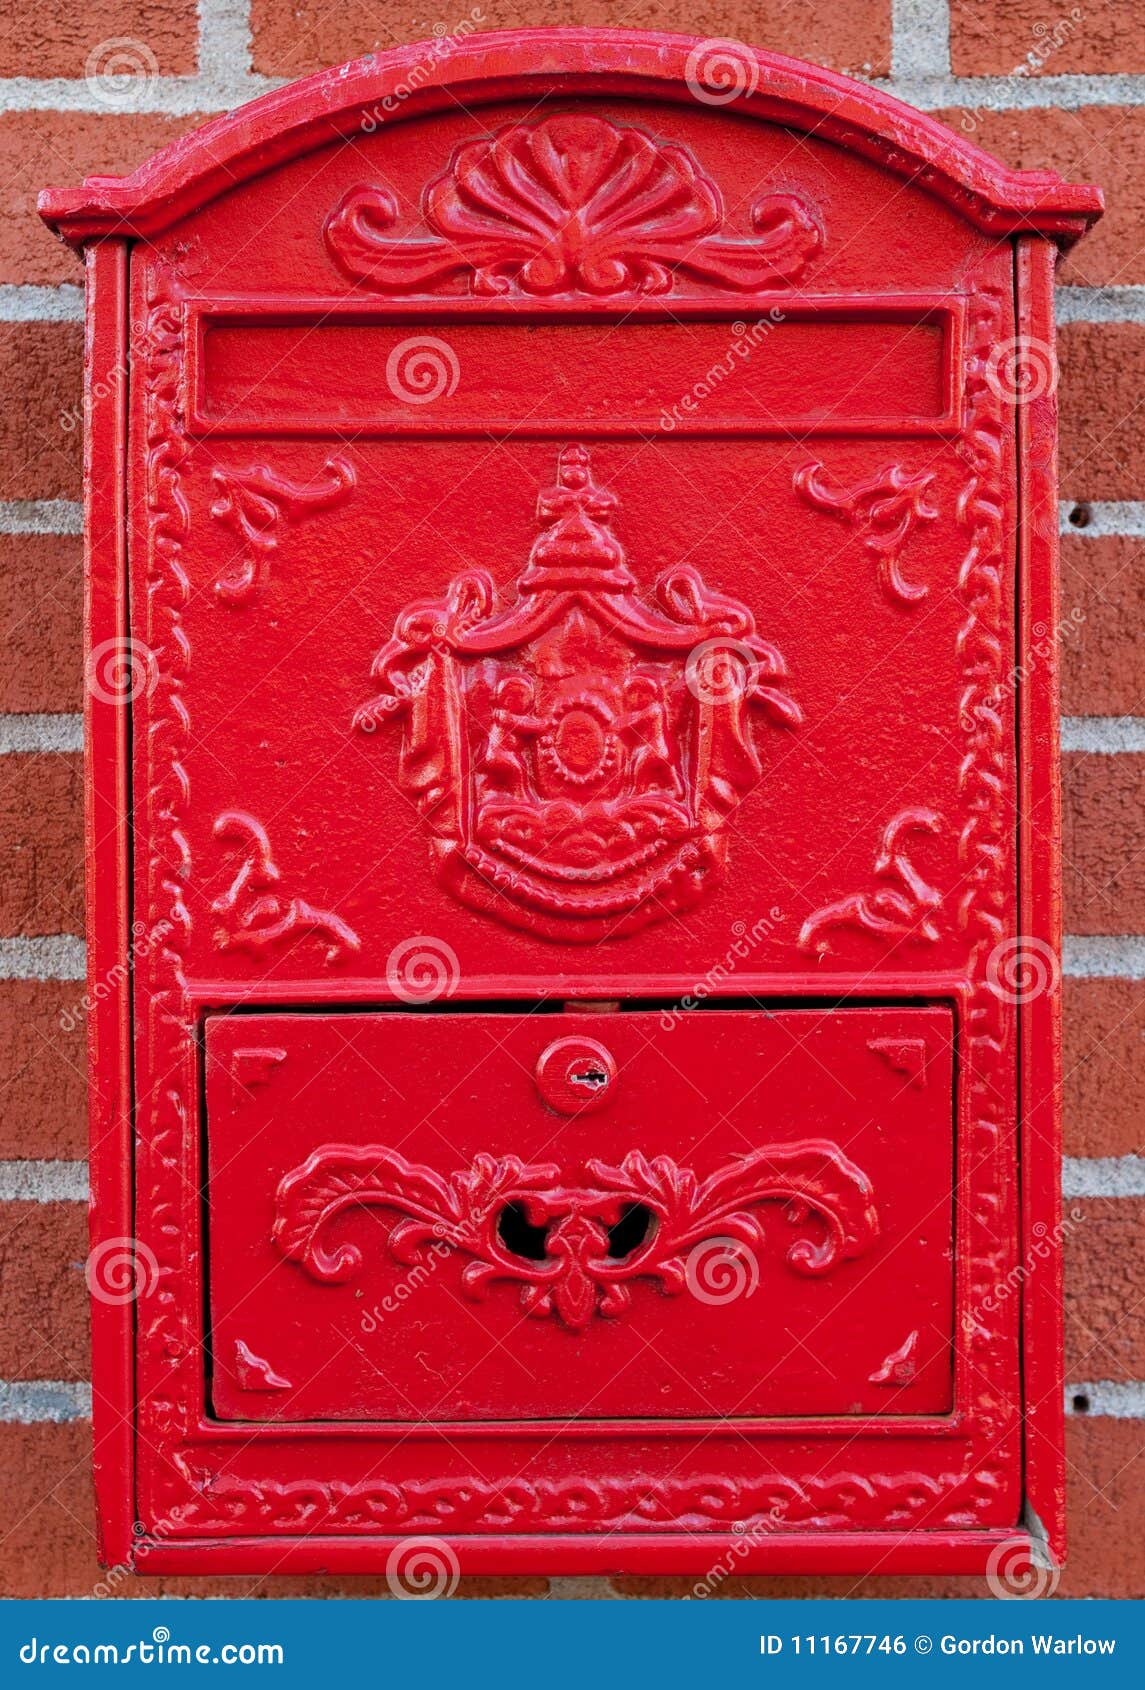 Postbox 6 1 12 x 12 rosemary print